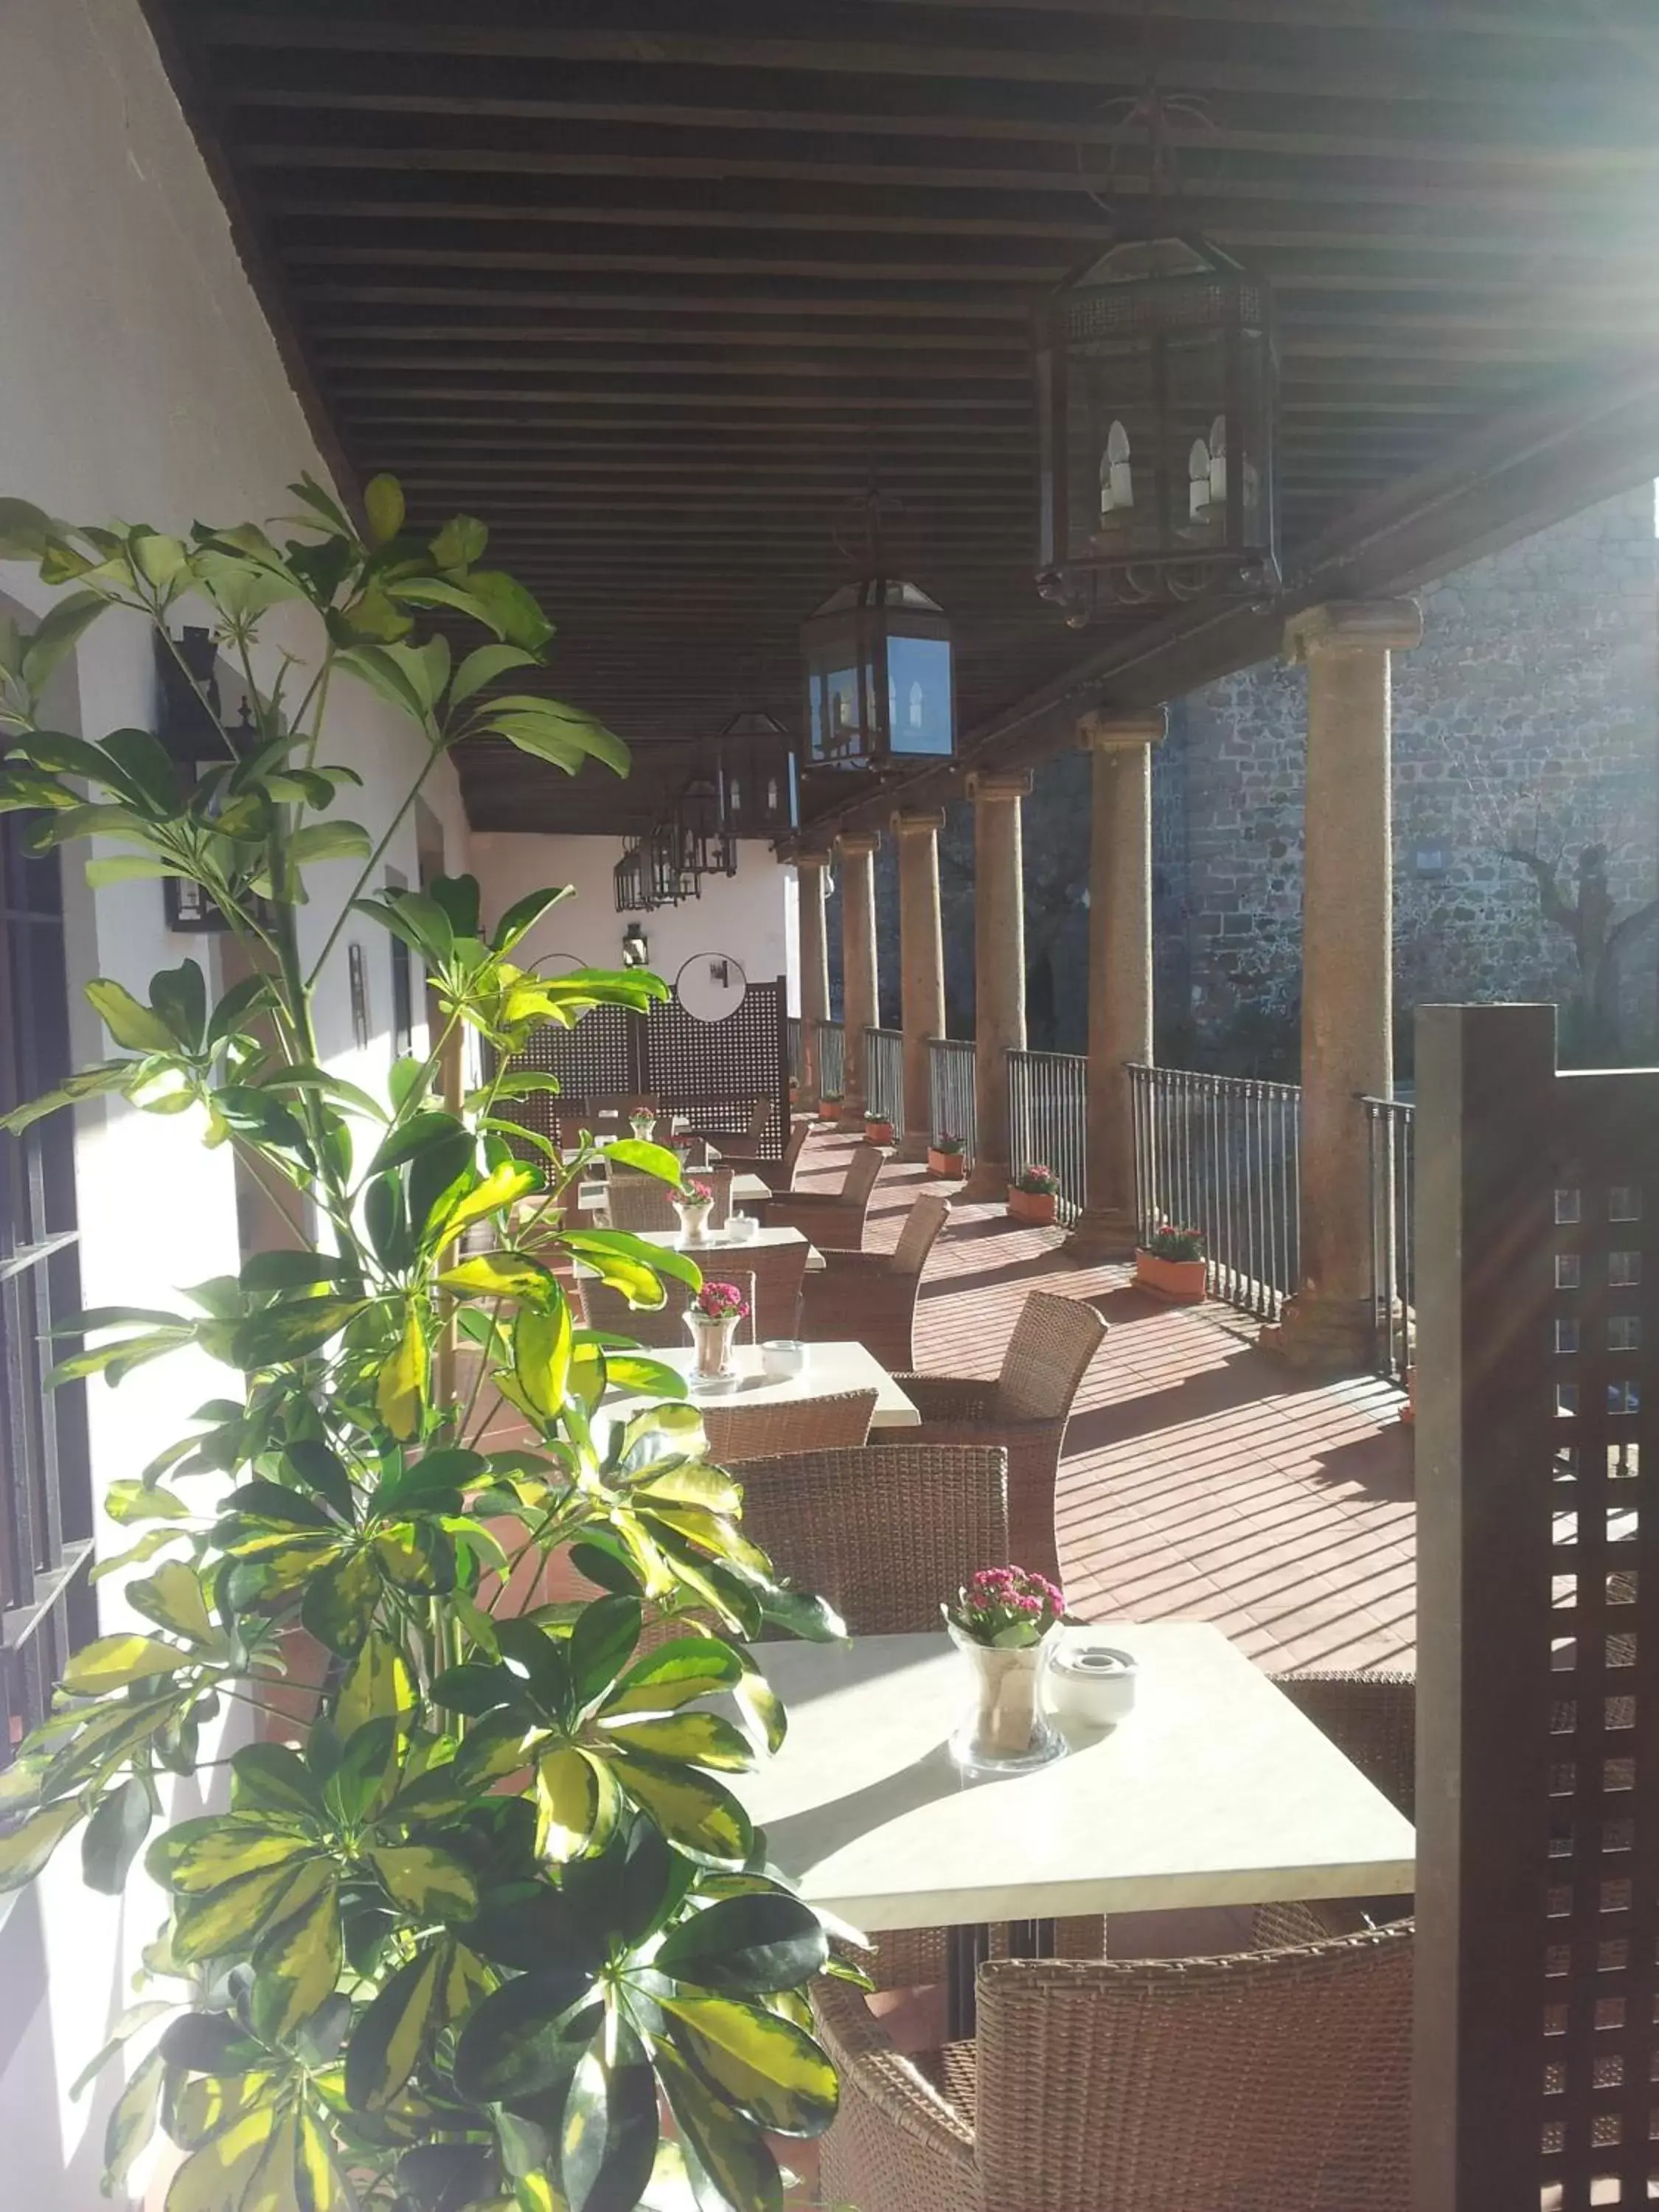 Balcony/Terrace, Restaurant/Places to Eat in Parador de Oropesa